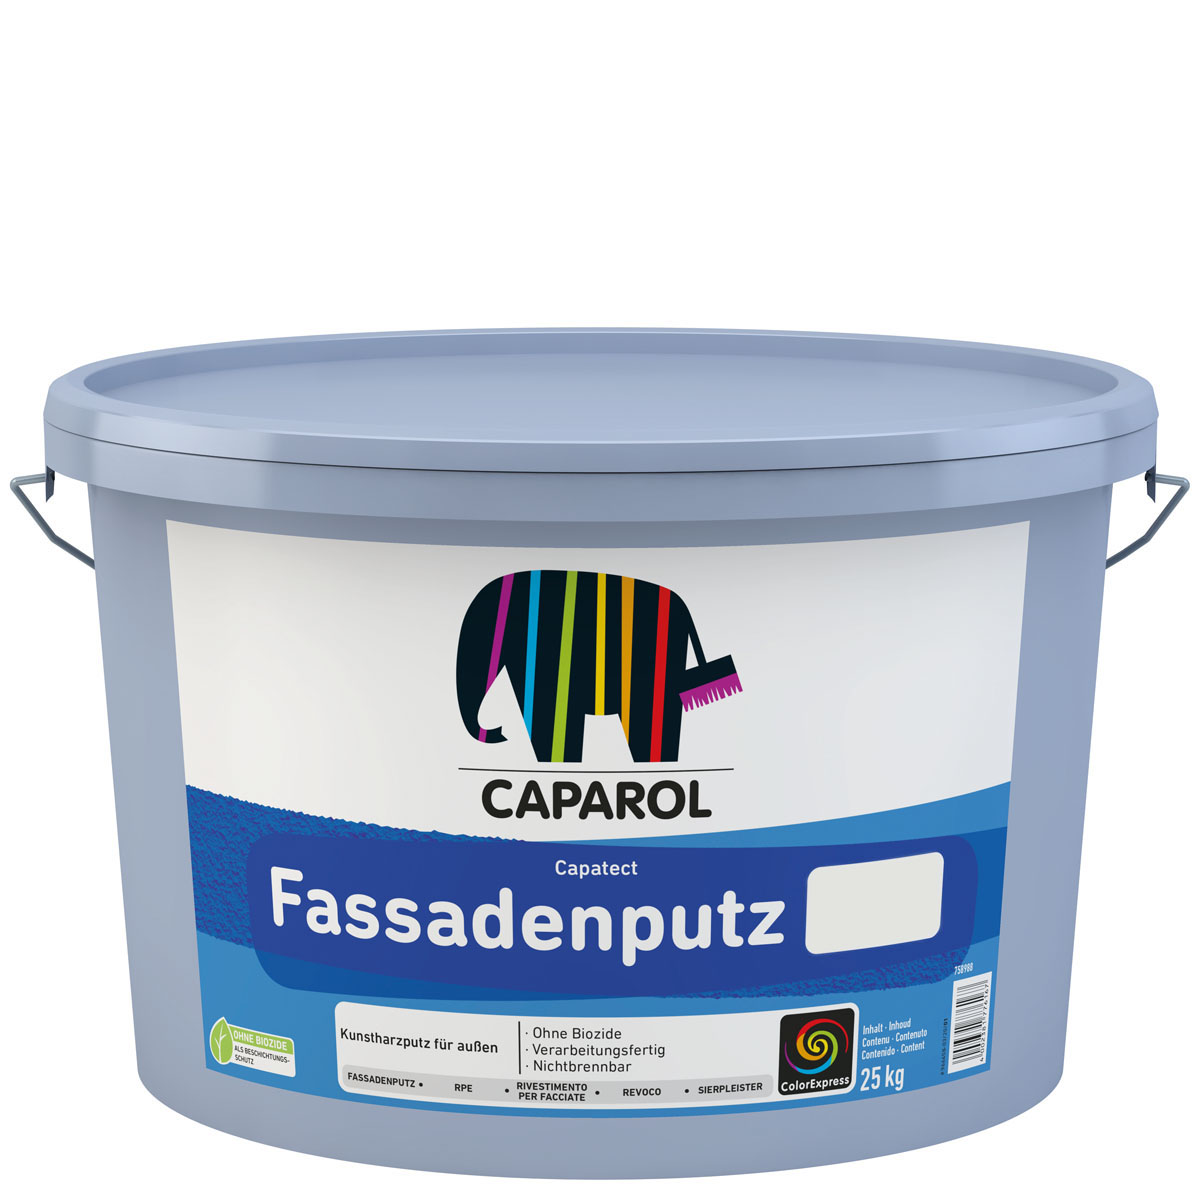 caparol_capatect_fassadenputz_gross